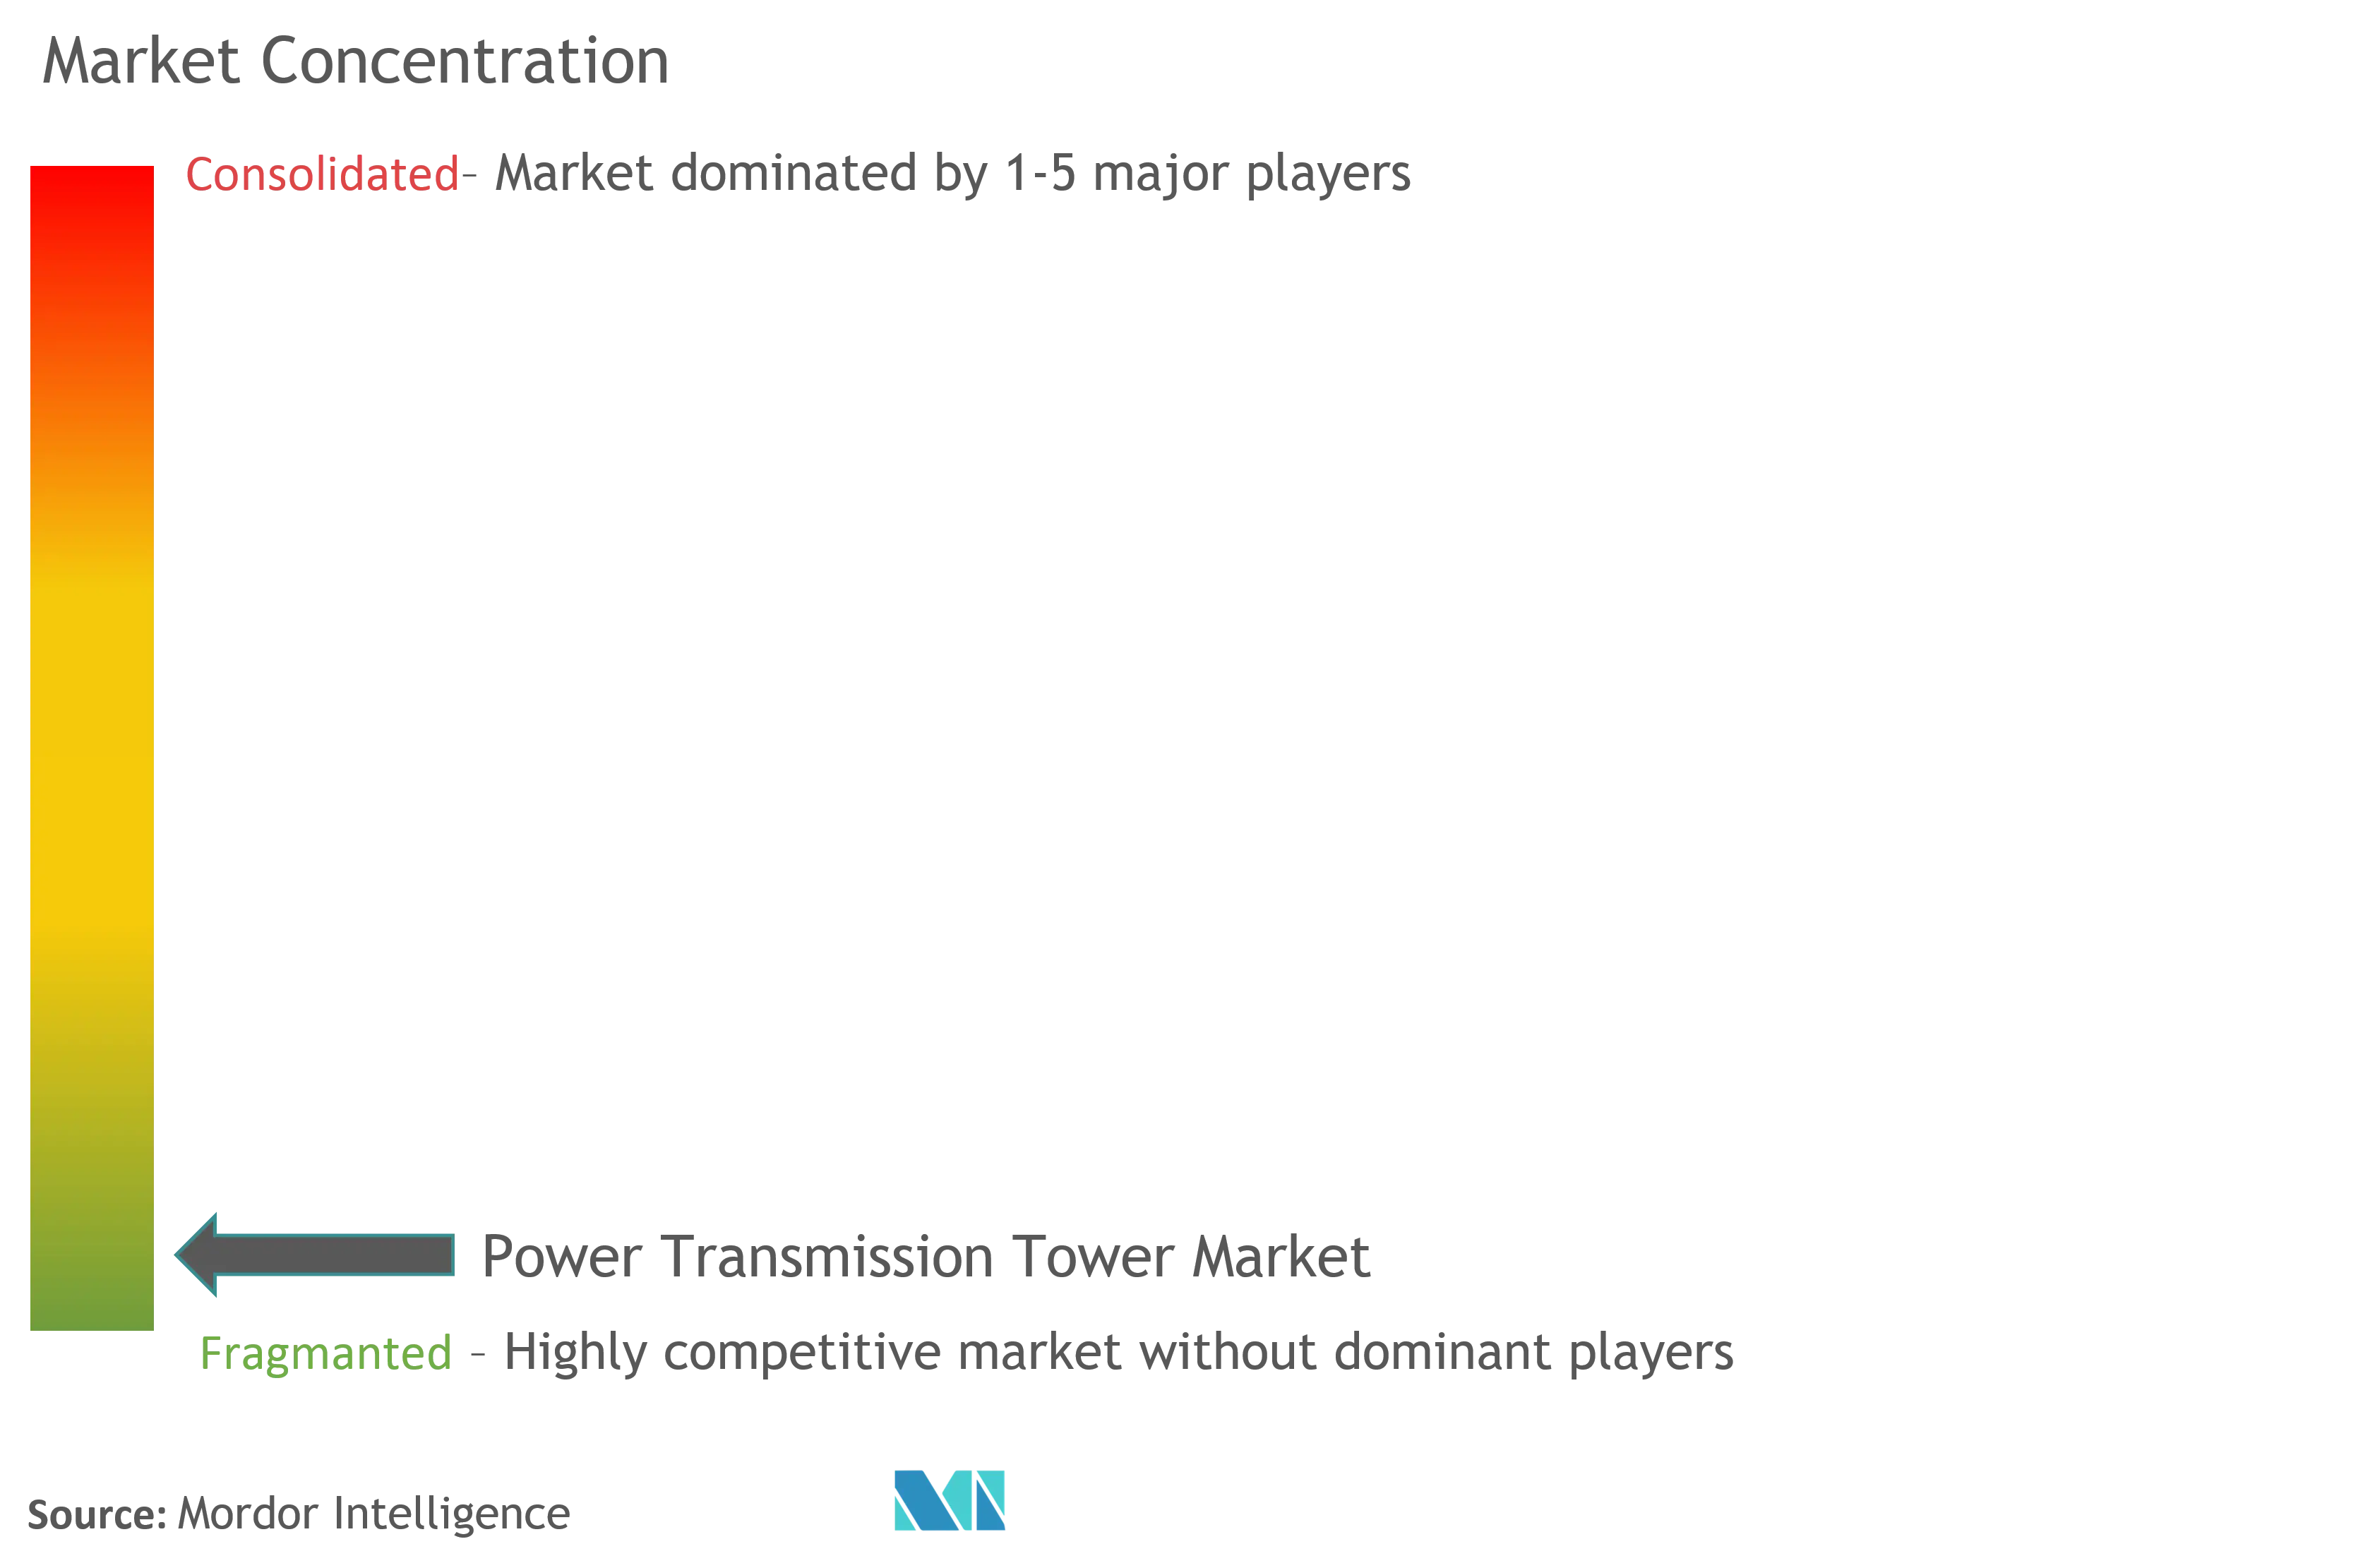 Power Transmission Tower Market Concentration